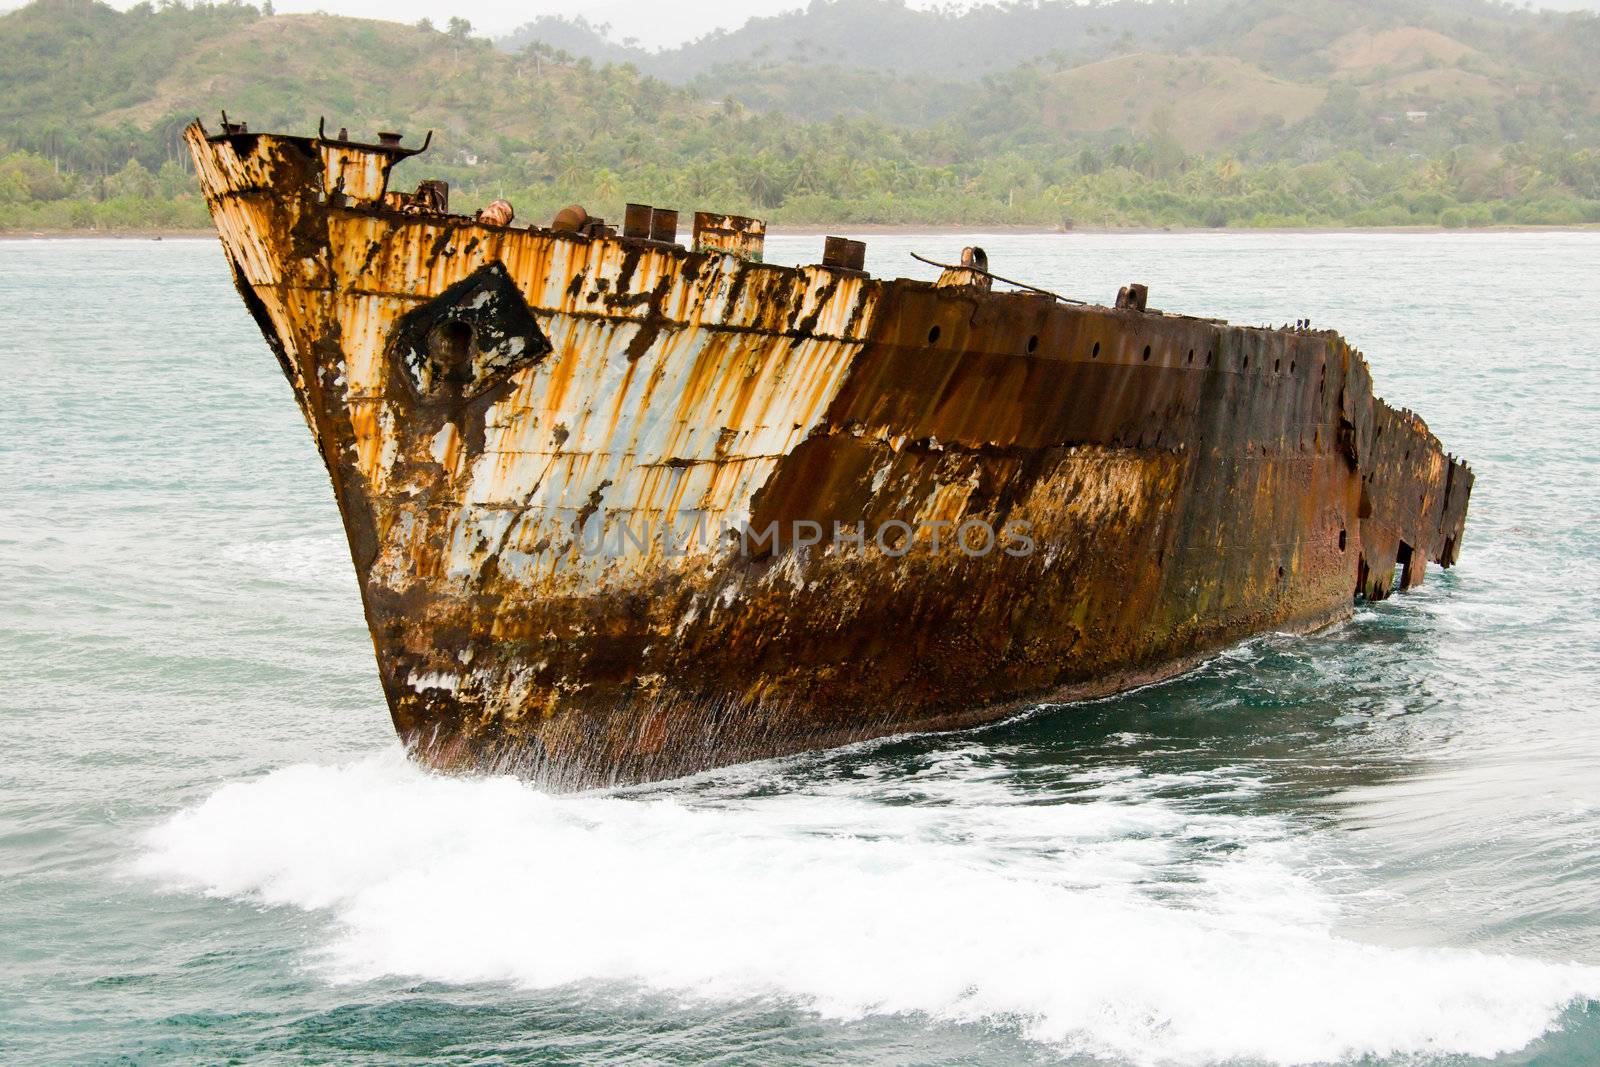 Old rusty ship in a sea after shipwreck near coast. January 2008, Baracoa, Cuba.